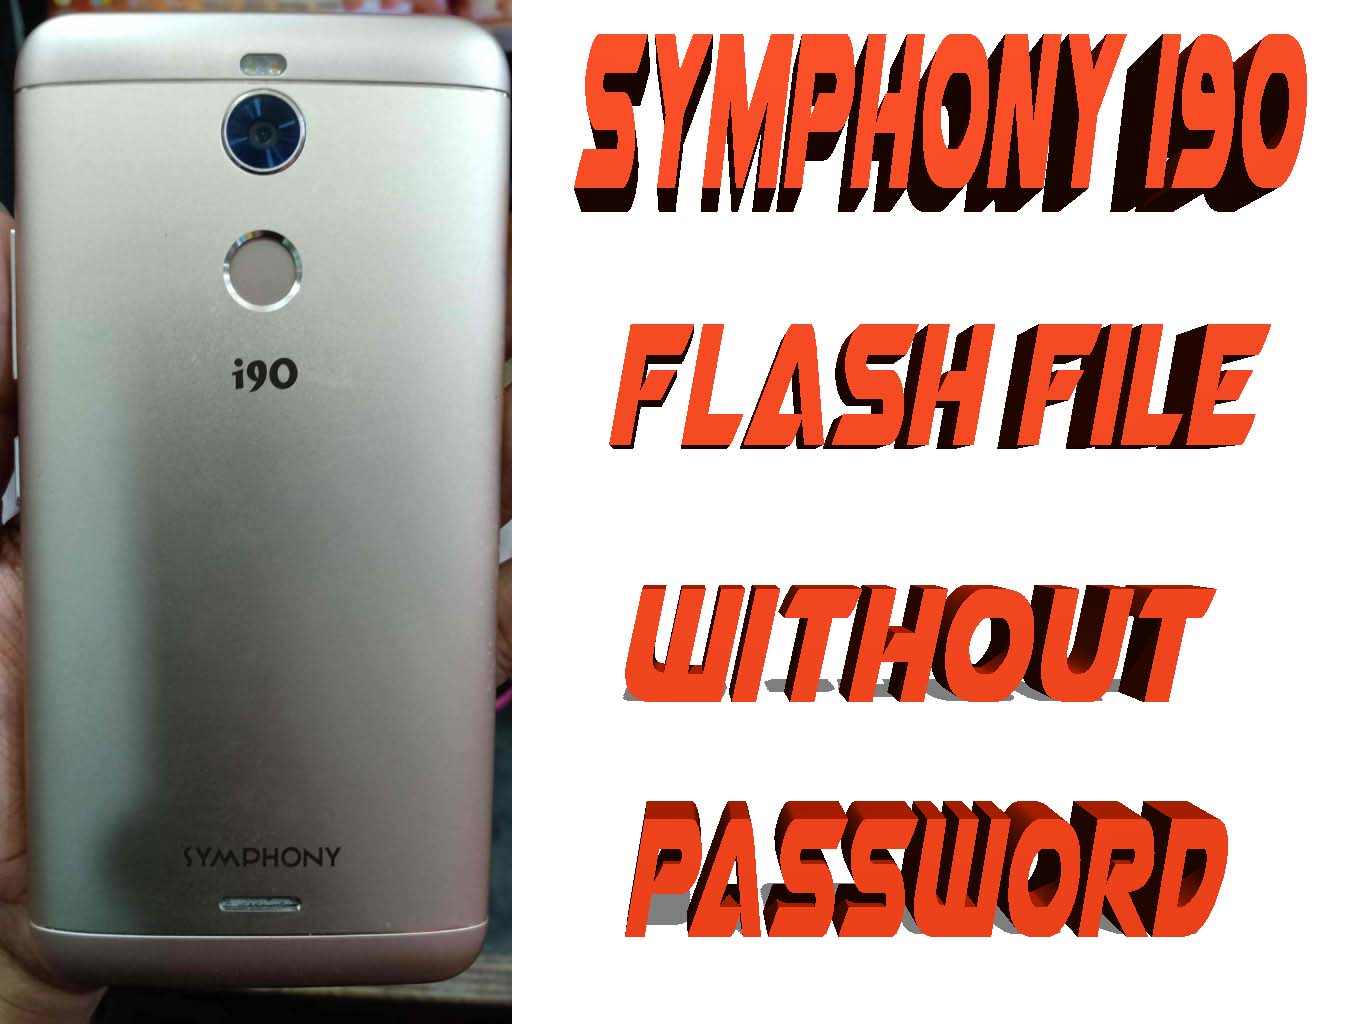 Symphony i90 Flash File Without Password